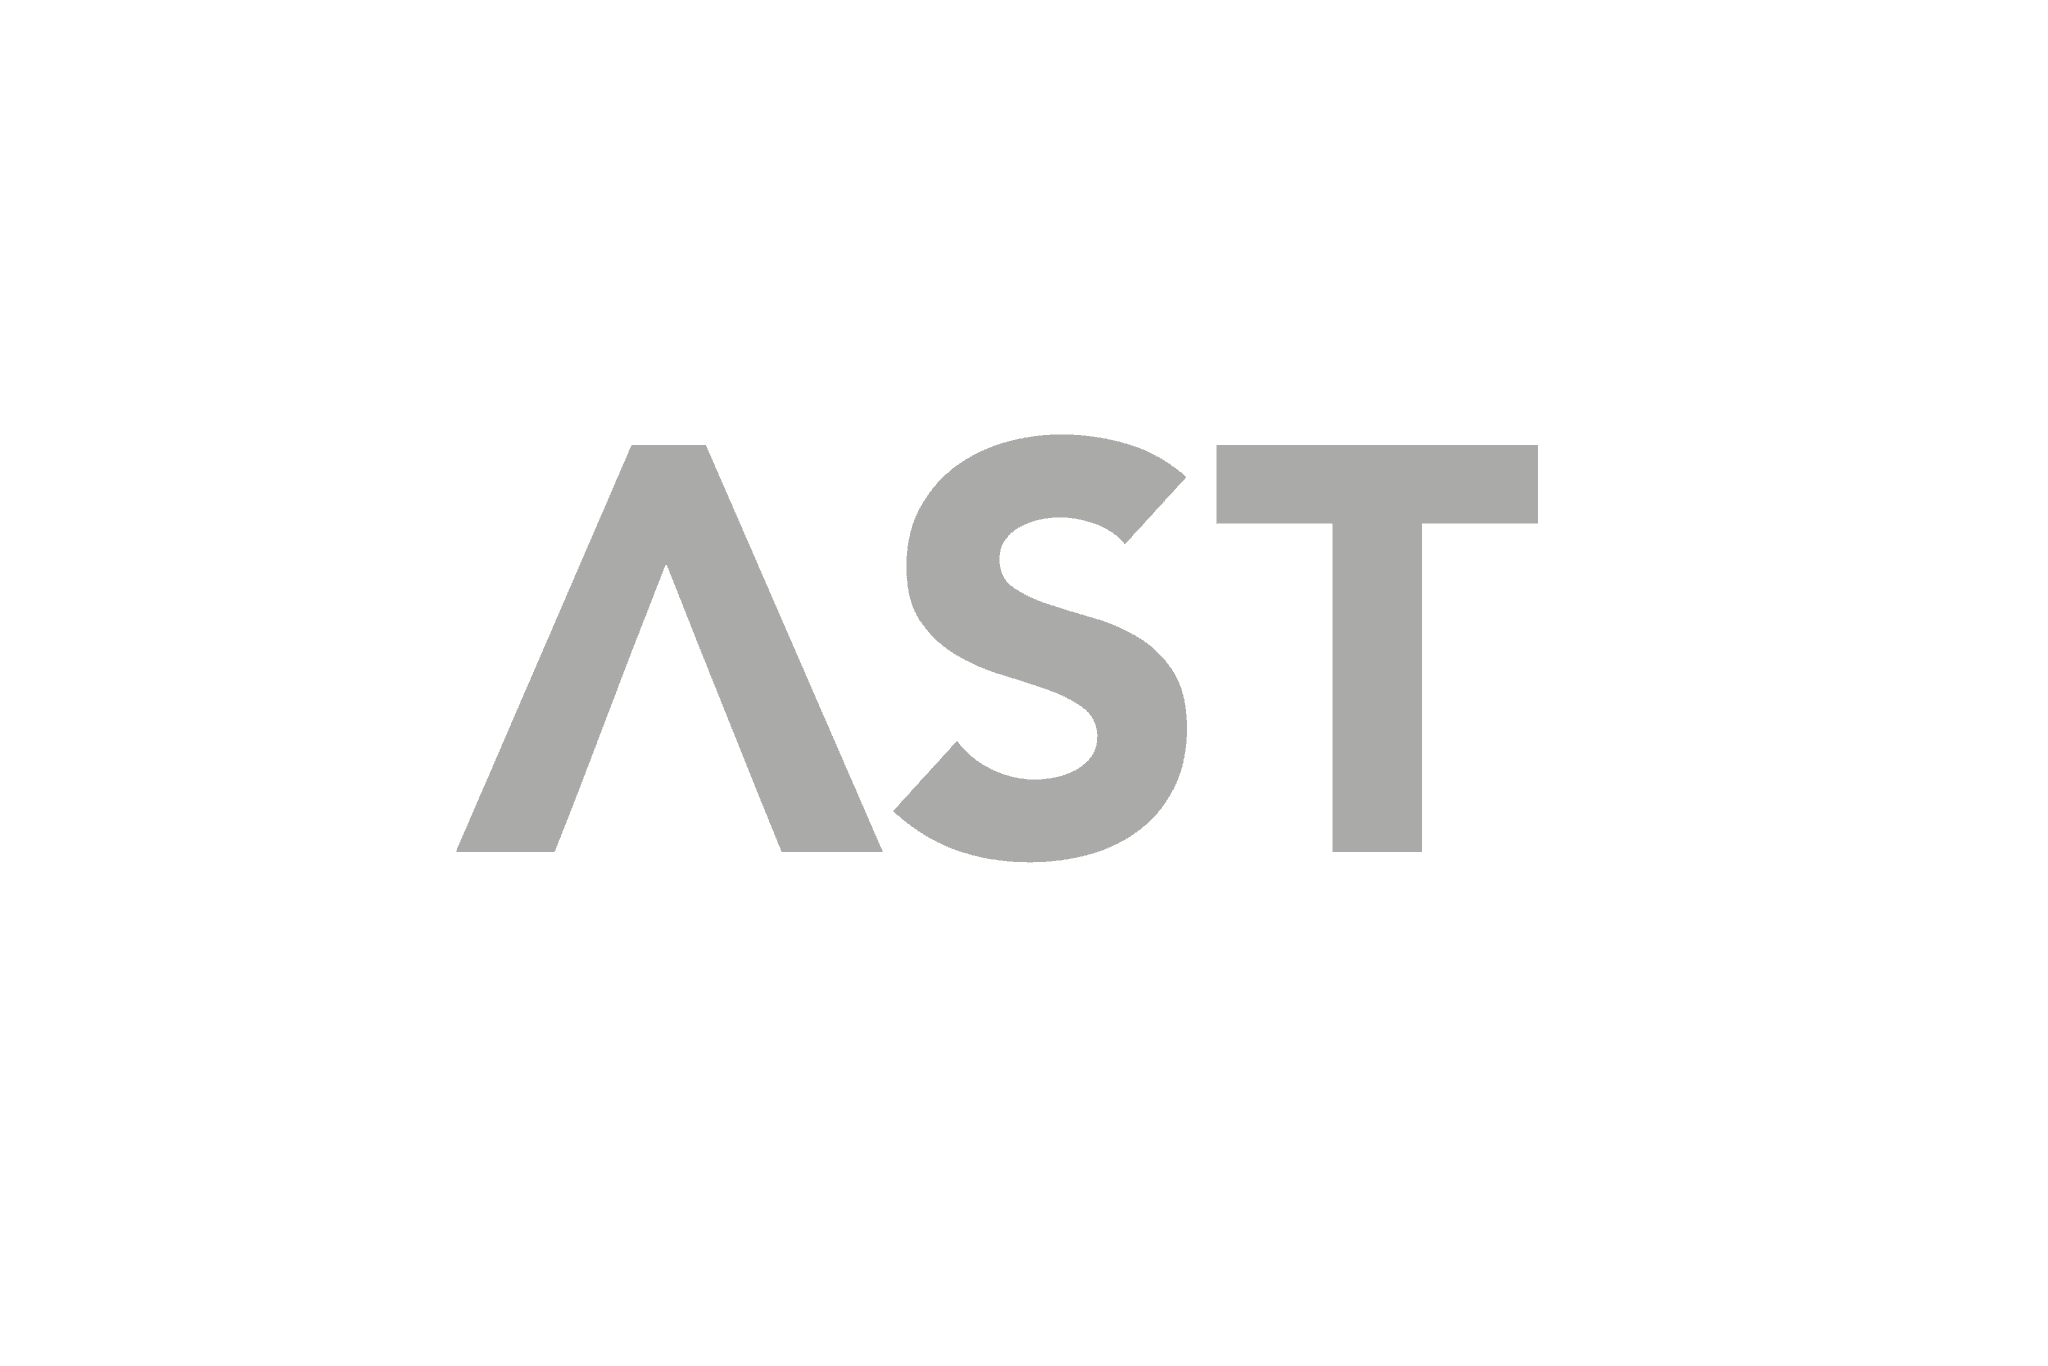 ast-logo-transparent